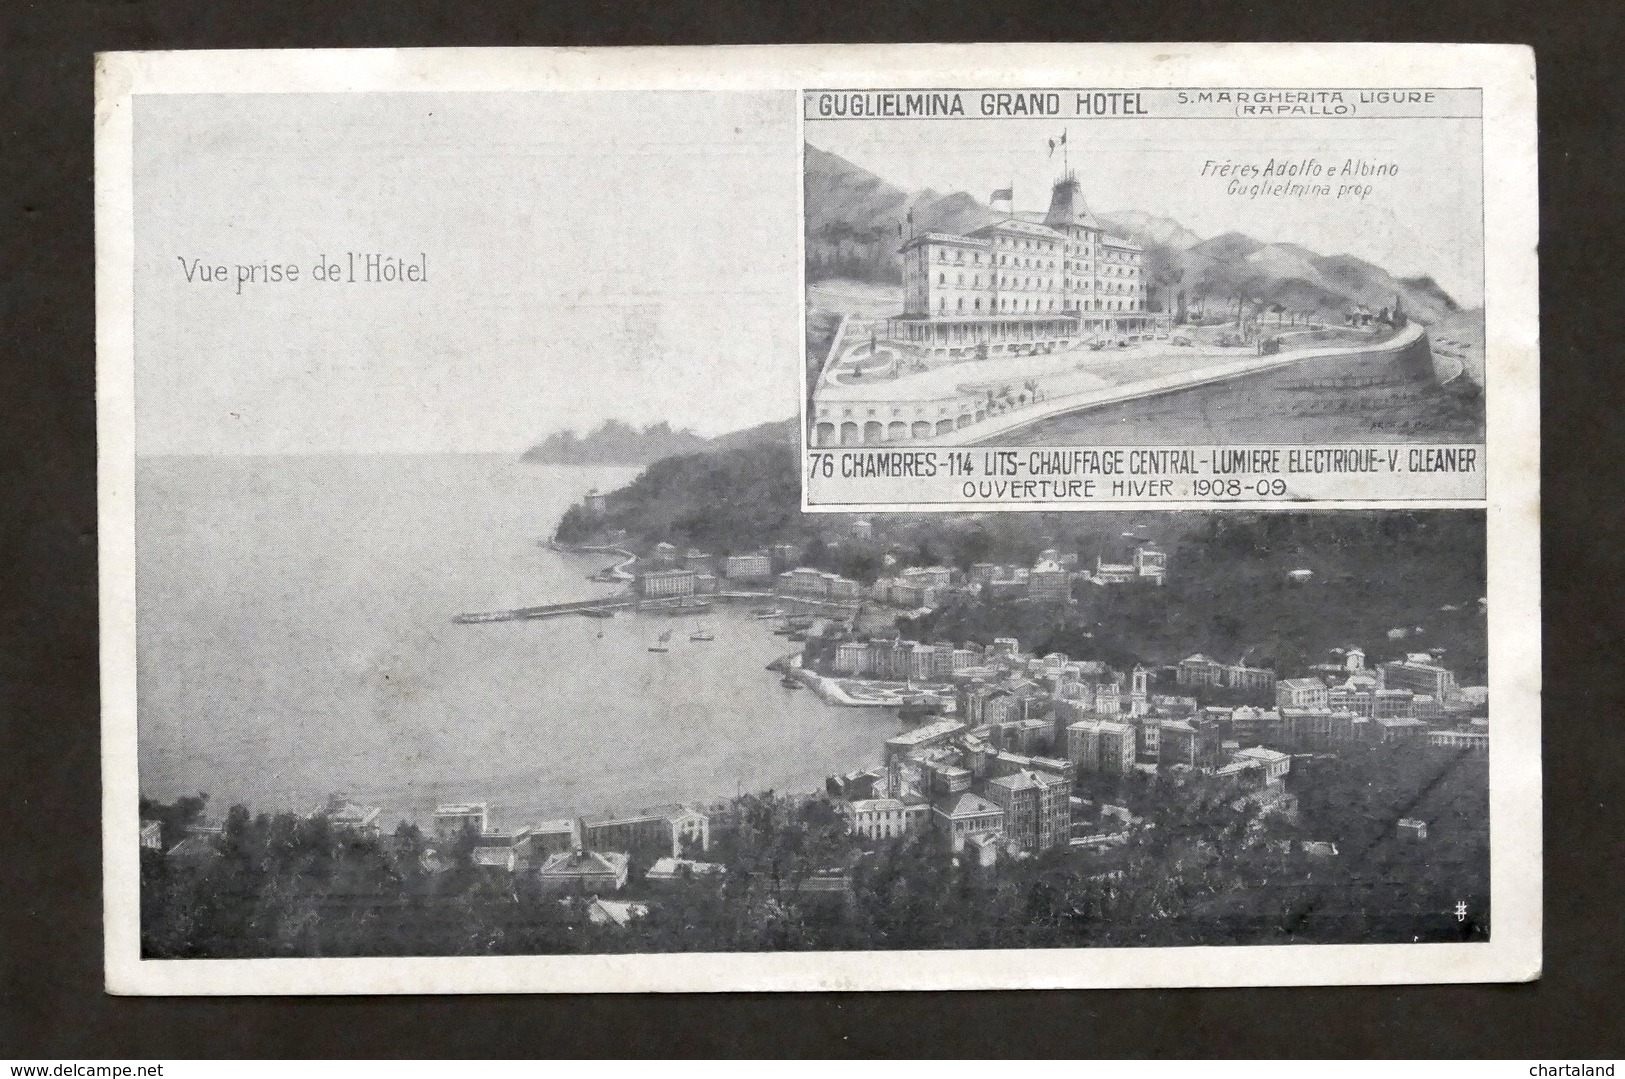 Turismo - Brochure Guglielmina Grand Hotel - Santa Margherita Ligure - 1908 - Pubblicitari